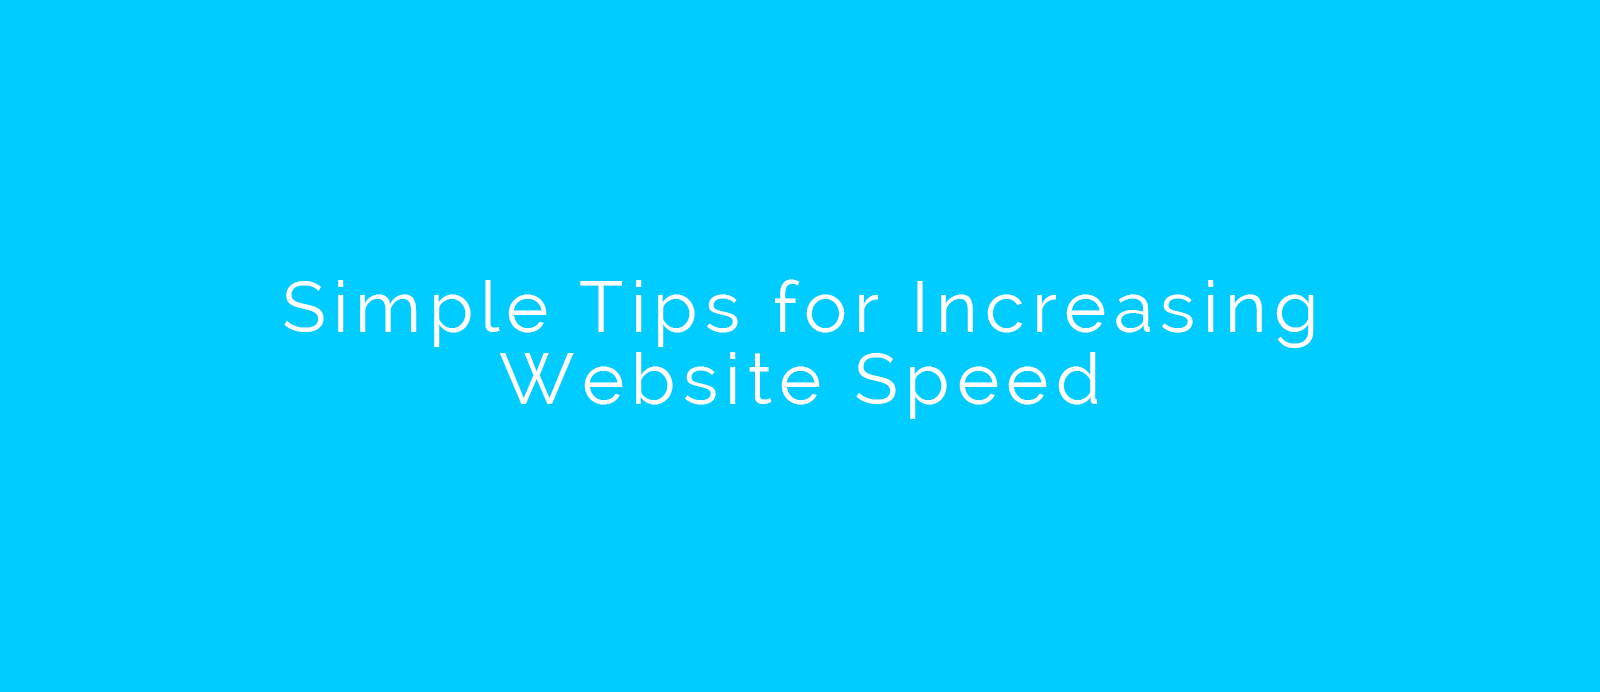 Simple Tips for Increasing Website Speed